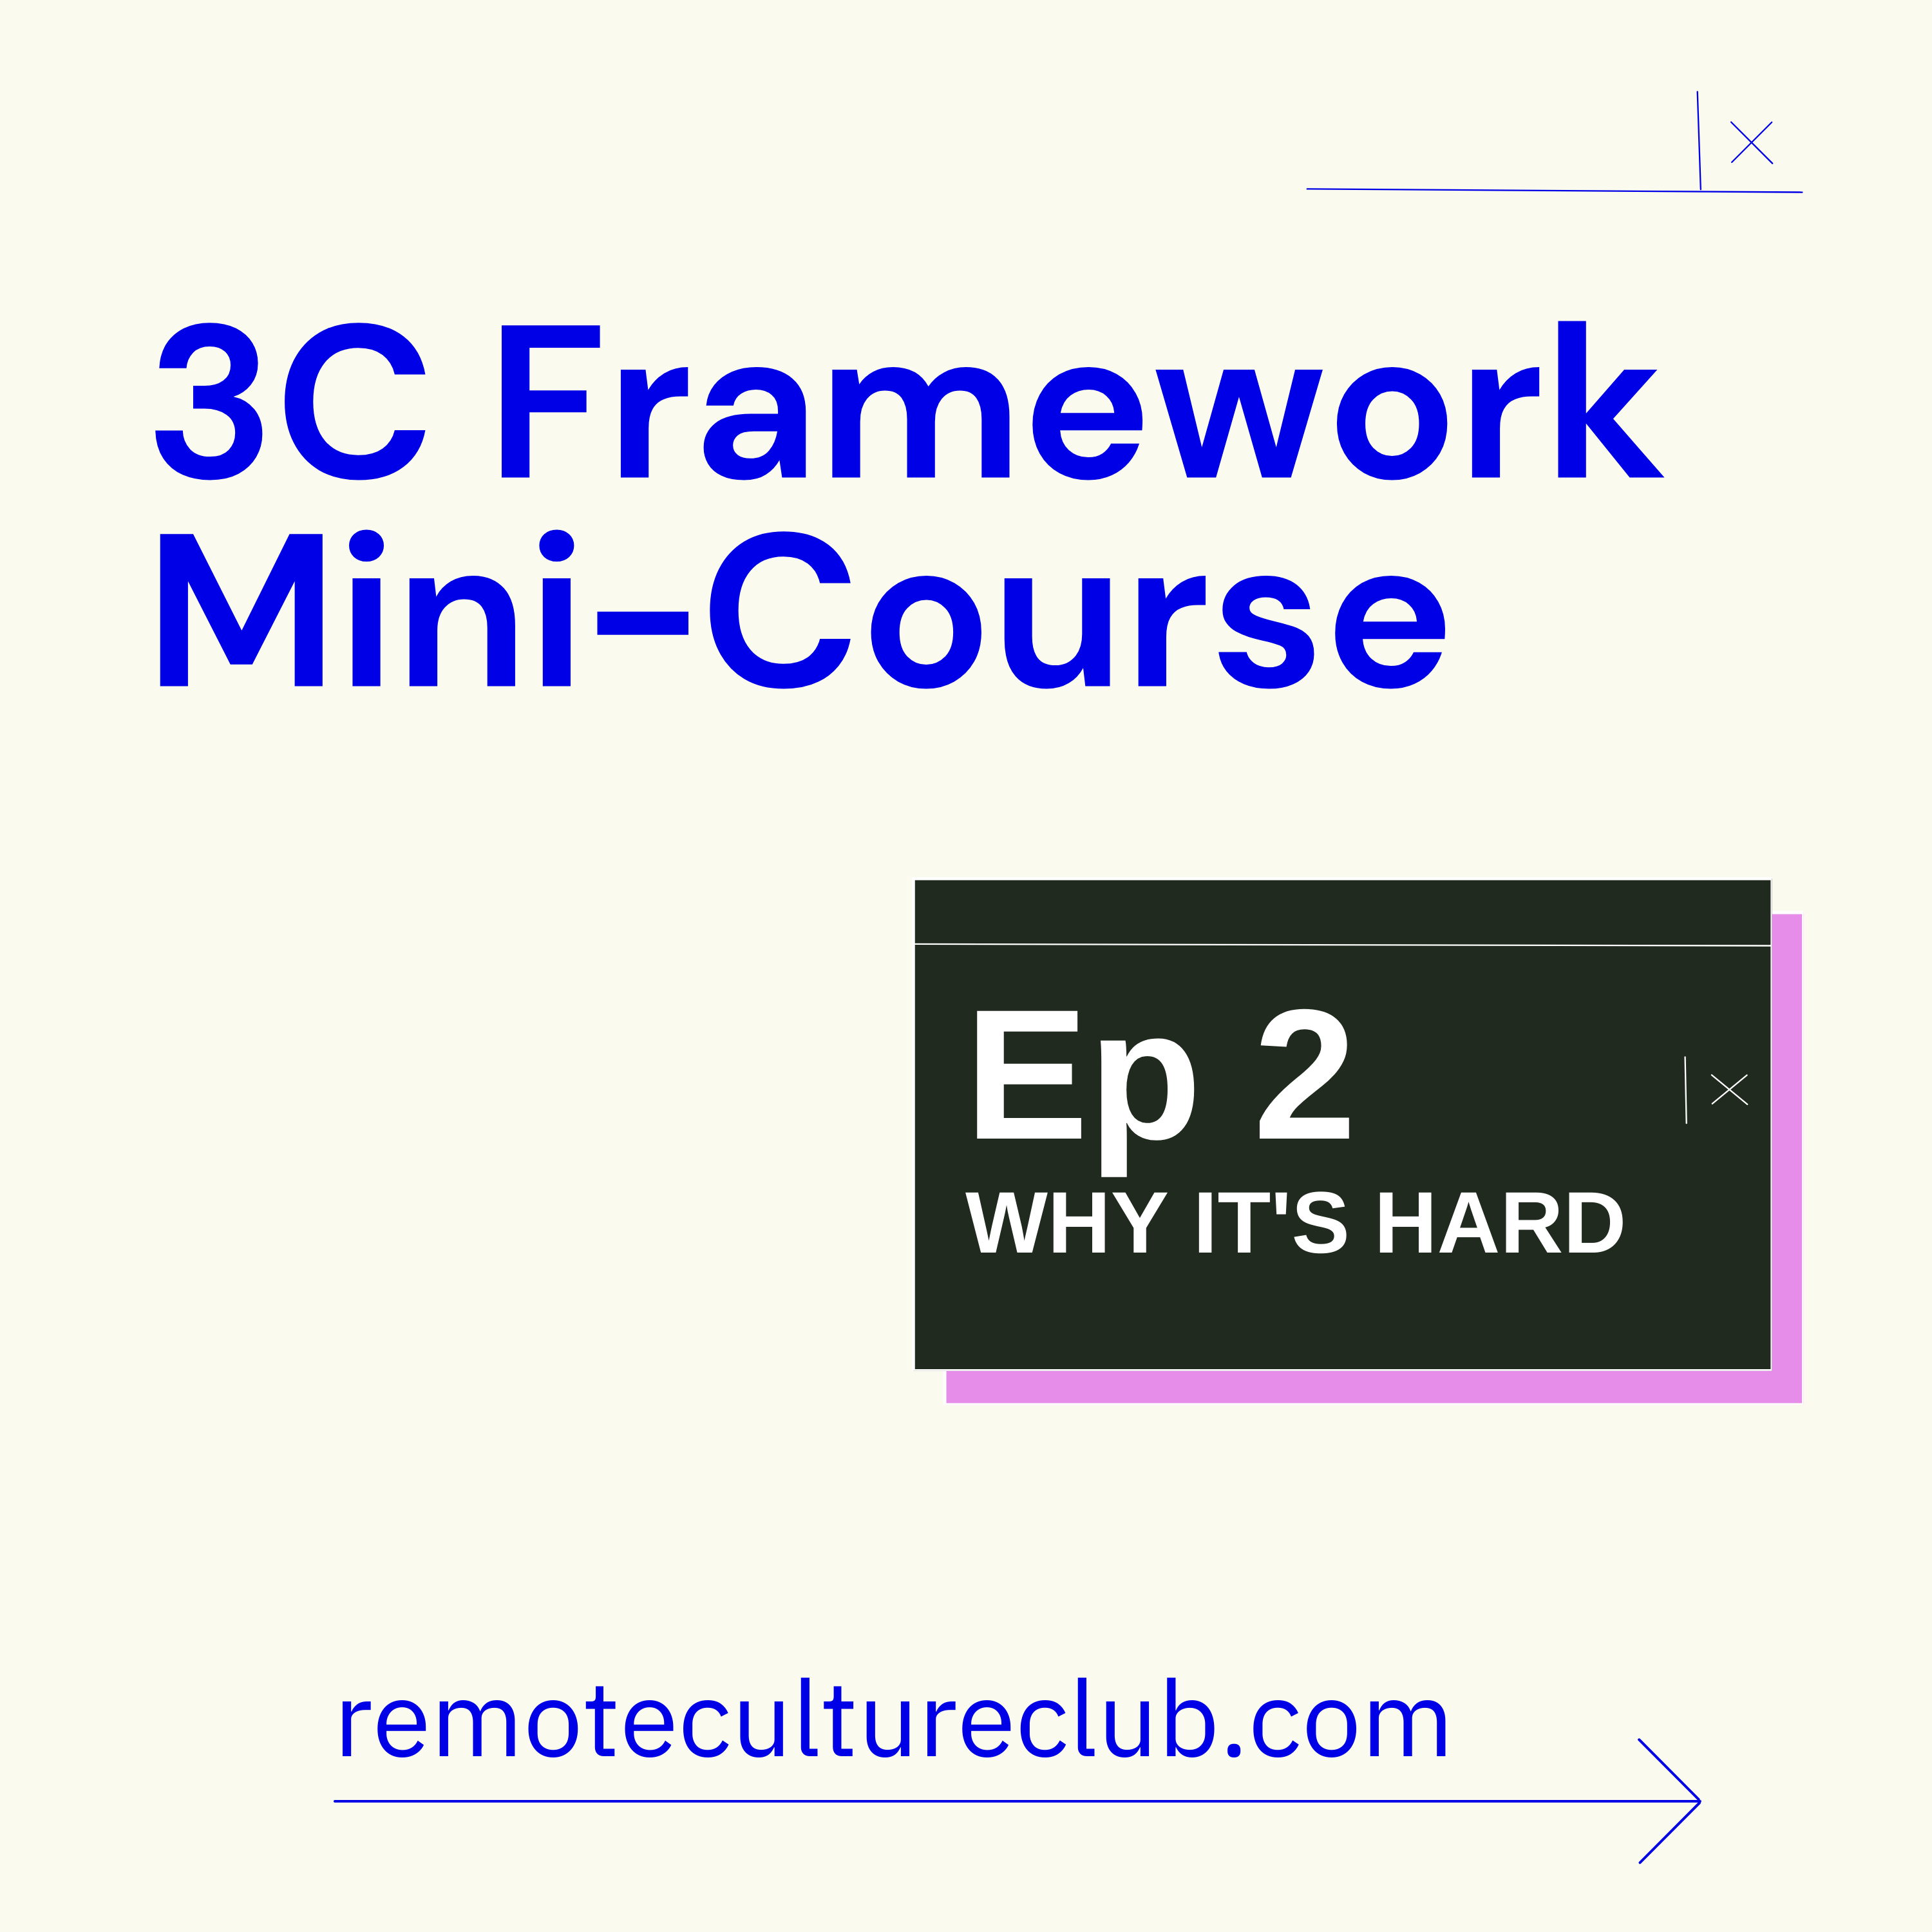 3C Framework Mini-Course: Why it’s HARD